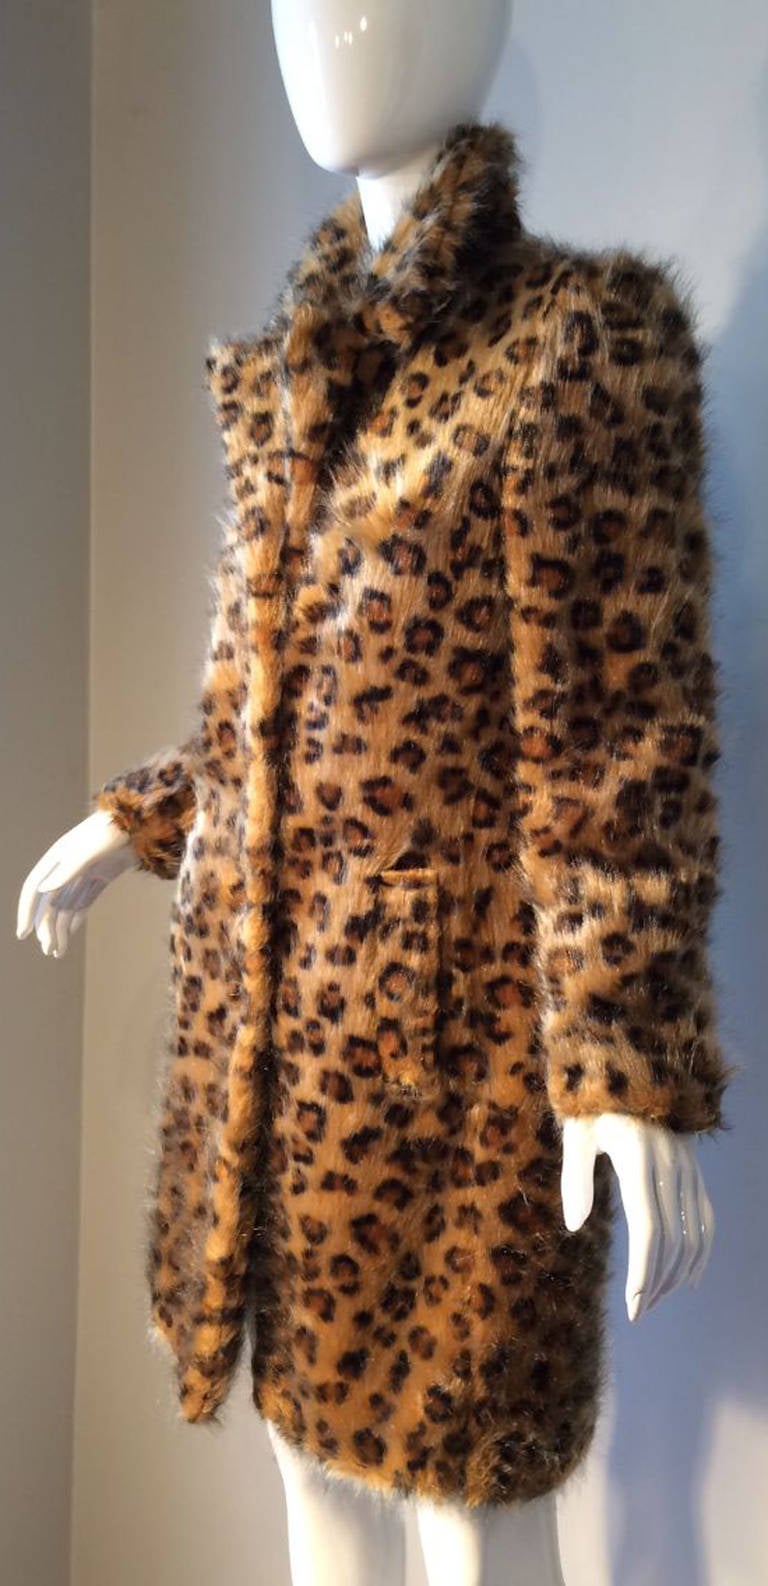 betsey johnson leopard coat